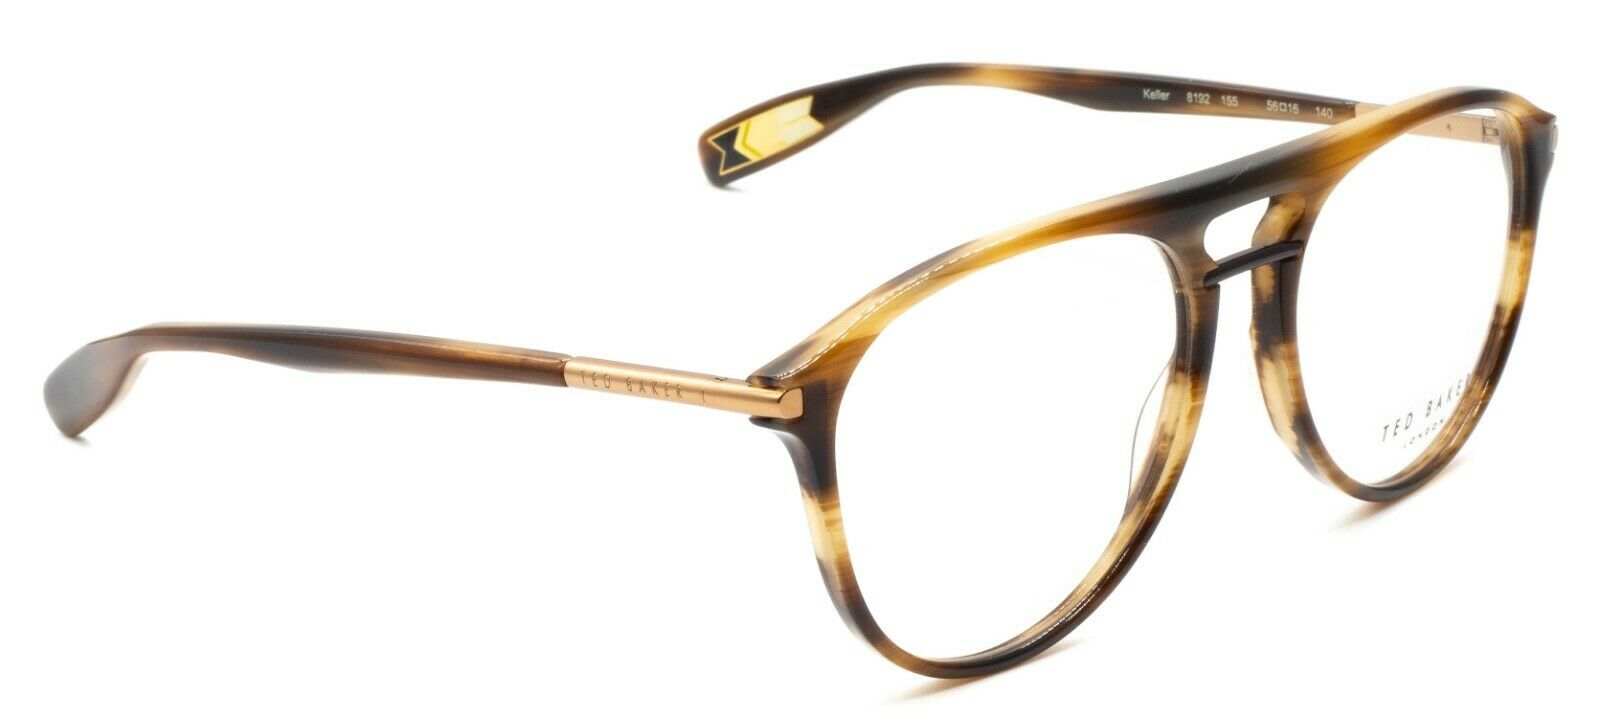 TED BAKER 8192 155 Keller 56mm Eyewear FRAMES Glasses Eyeglasses RX Optical New